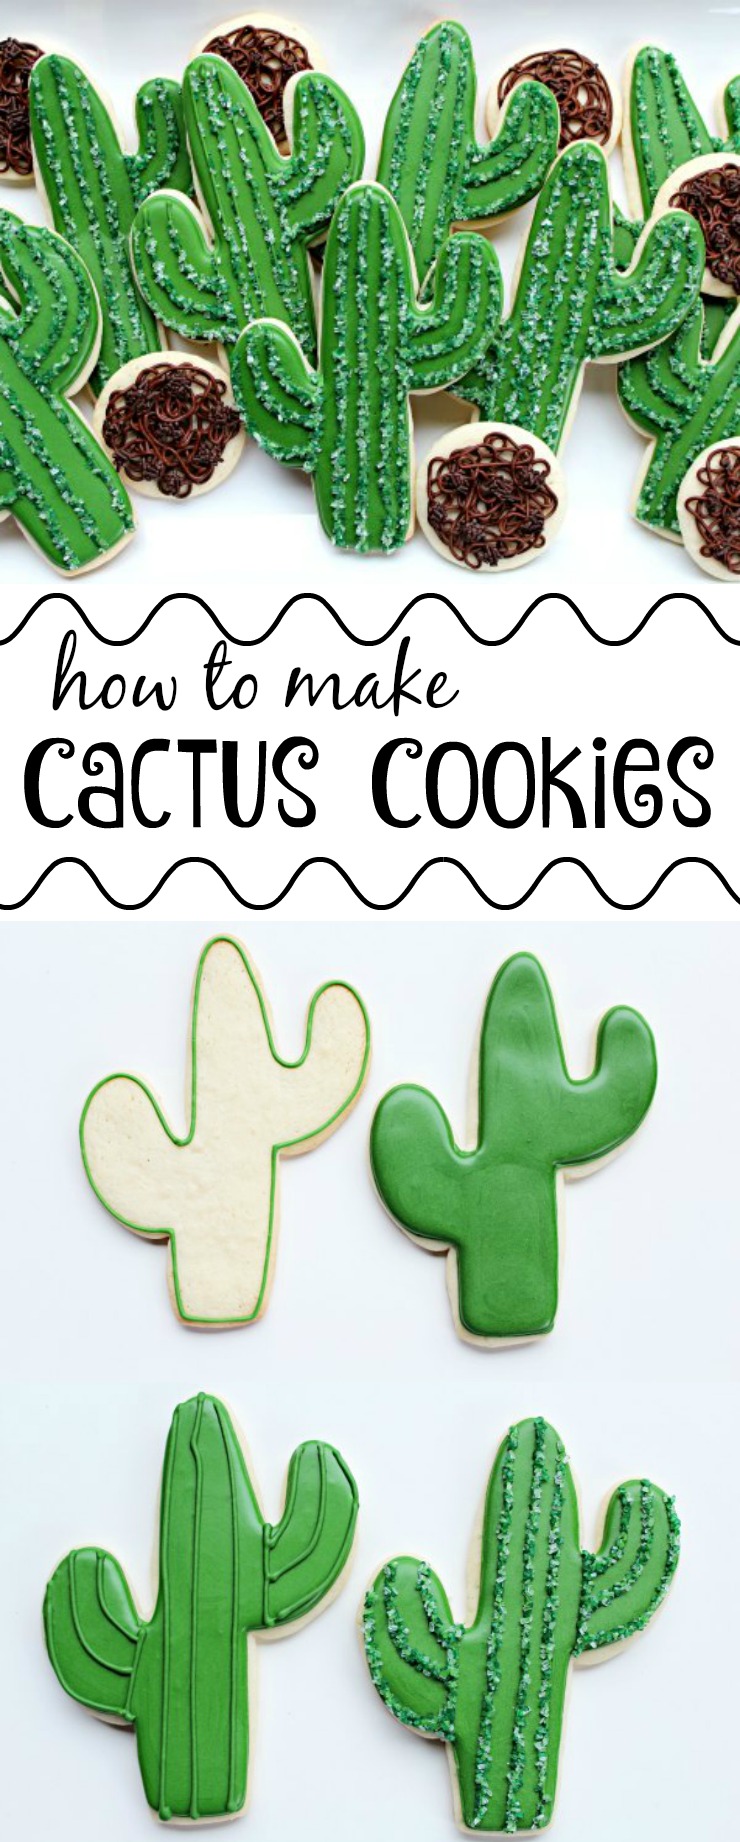 How to Make Cactus Cookies | The Bearfoot Baker